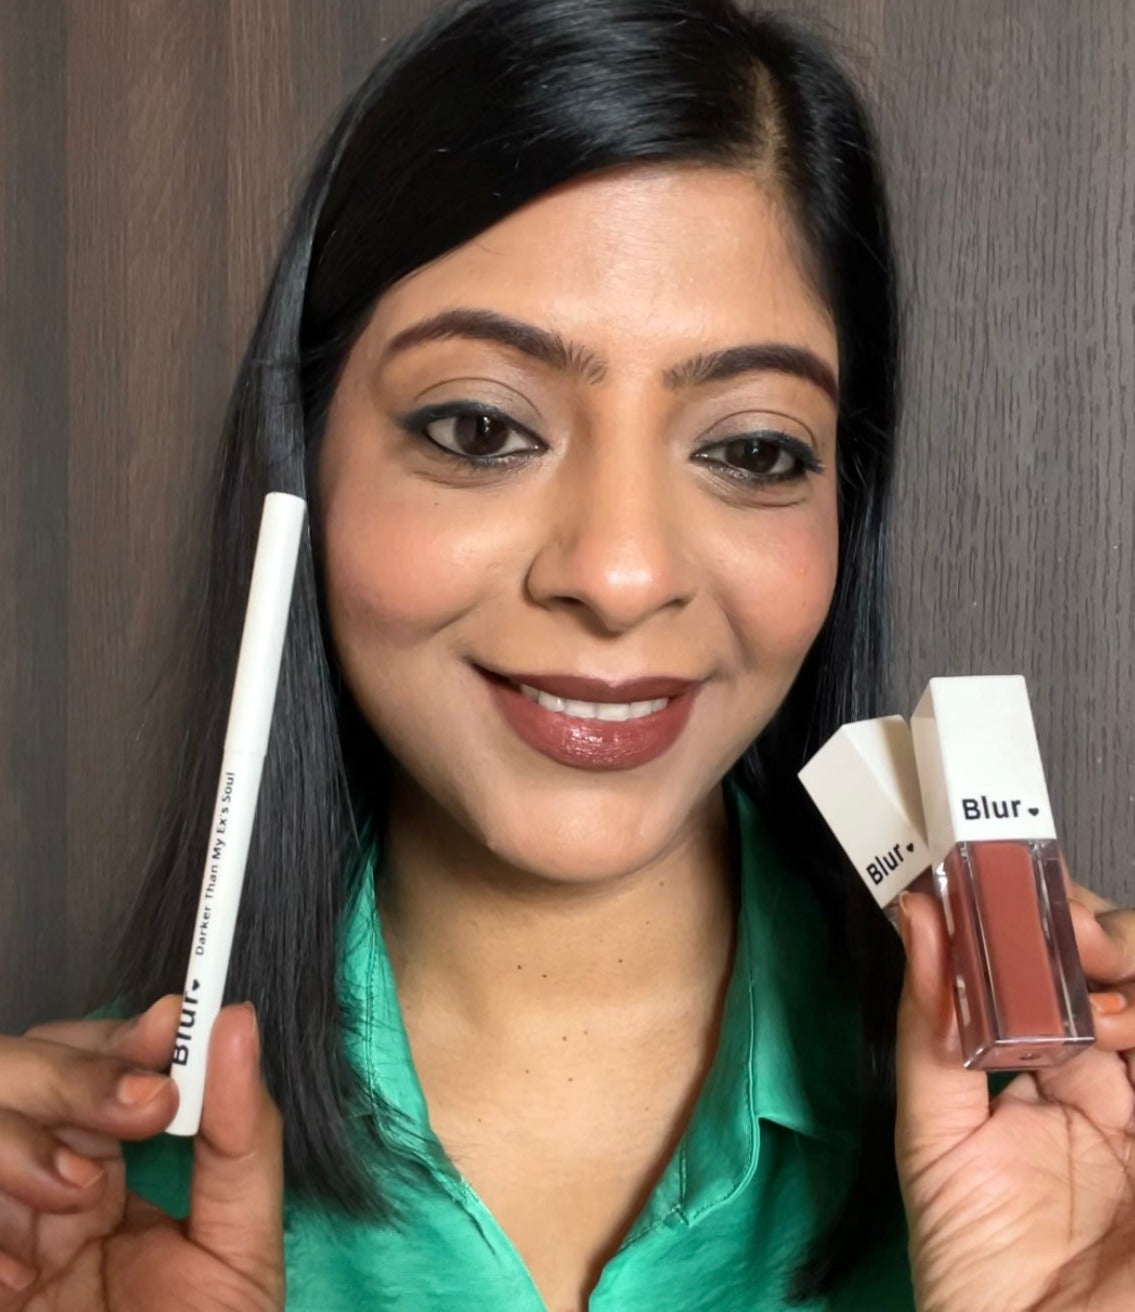 BLUR x PARICHITA Kit | Buy Blur 3 Nude Lipsticks At 999 in India